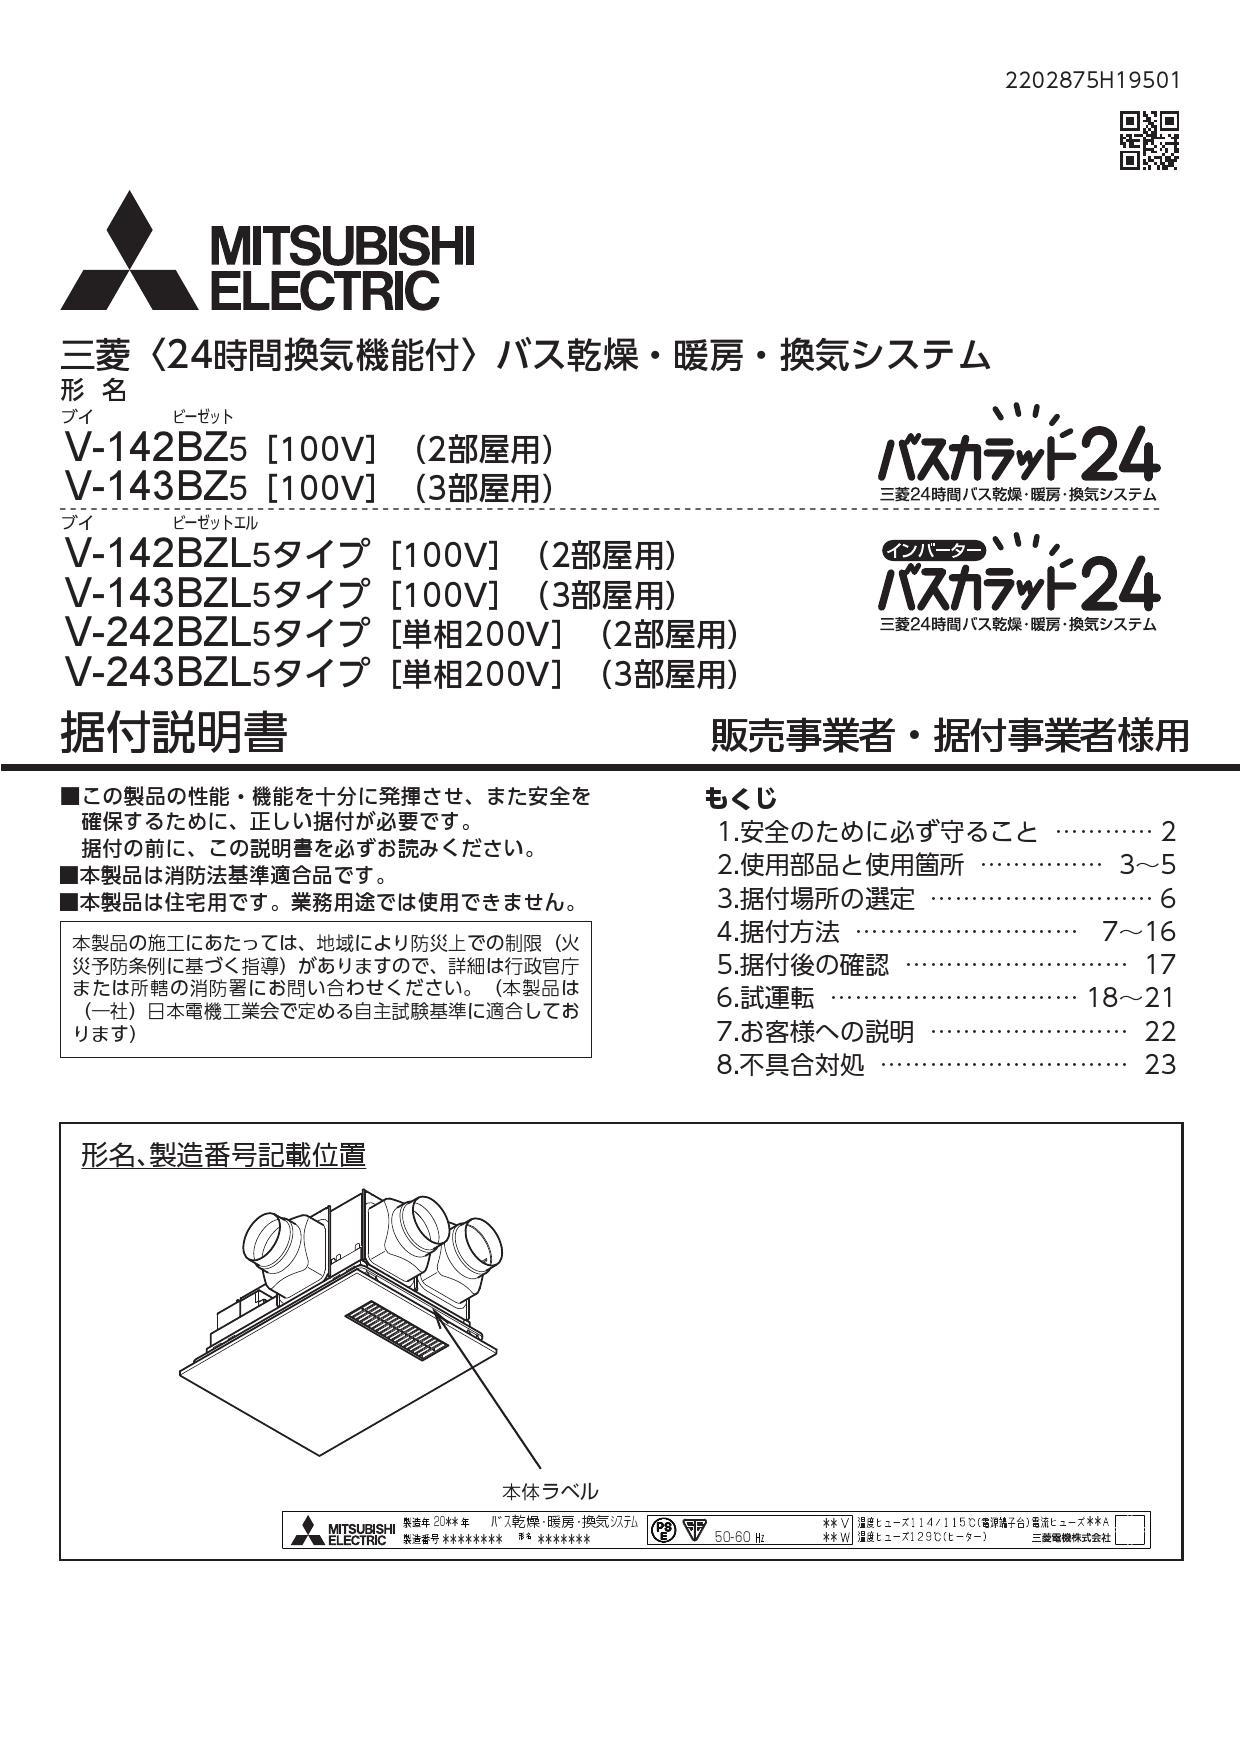 V-242BZL5 三菱電機 MITSUBISHI 浴室乾燥機 バスカラット24 2部屋換気用 単相200V電源ハイパワータイプ 送料無料 大特価